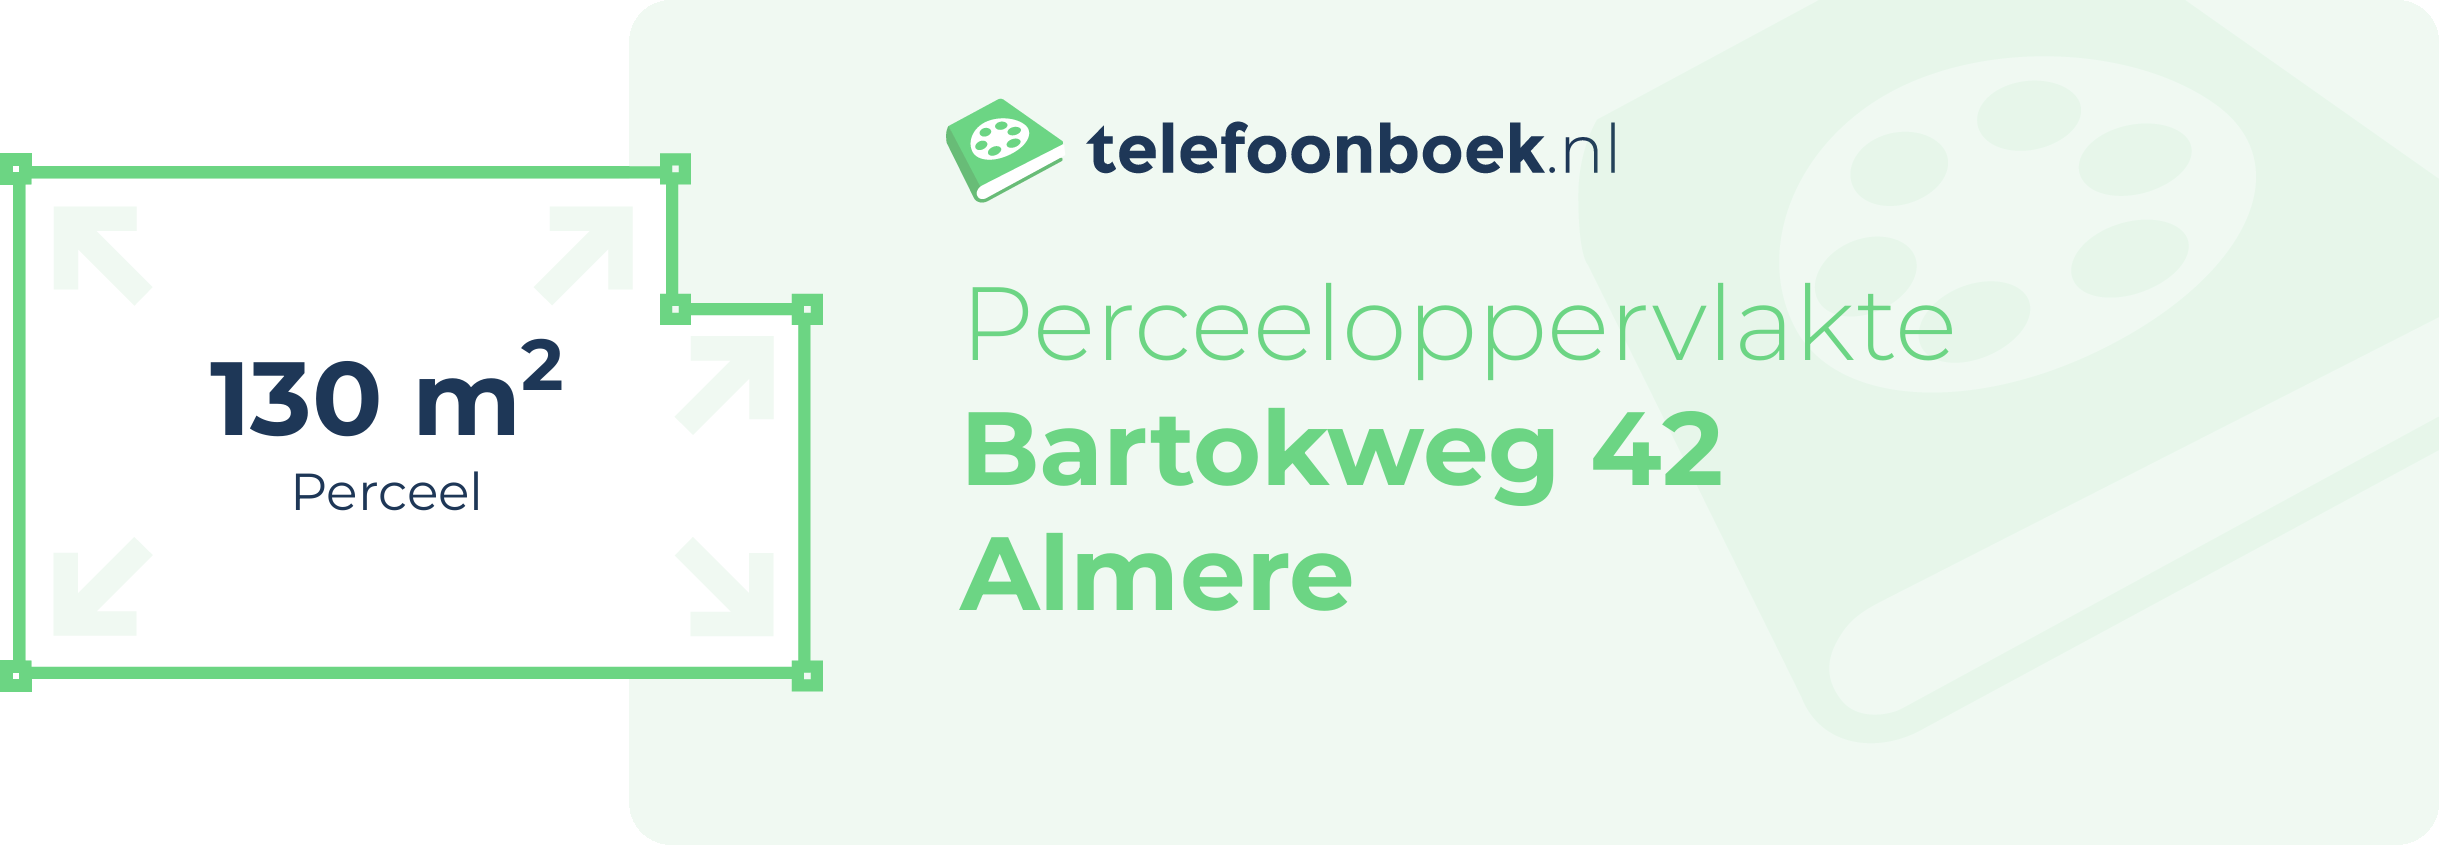 Perceeloppervlakte Bartokweg 42 Almere